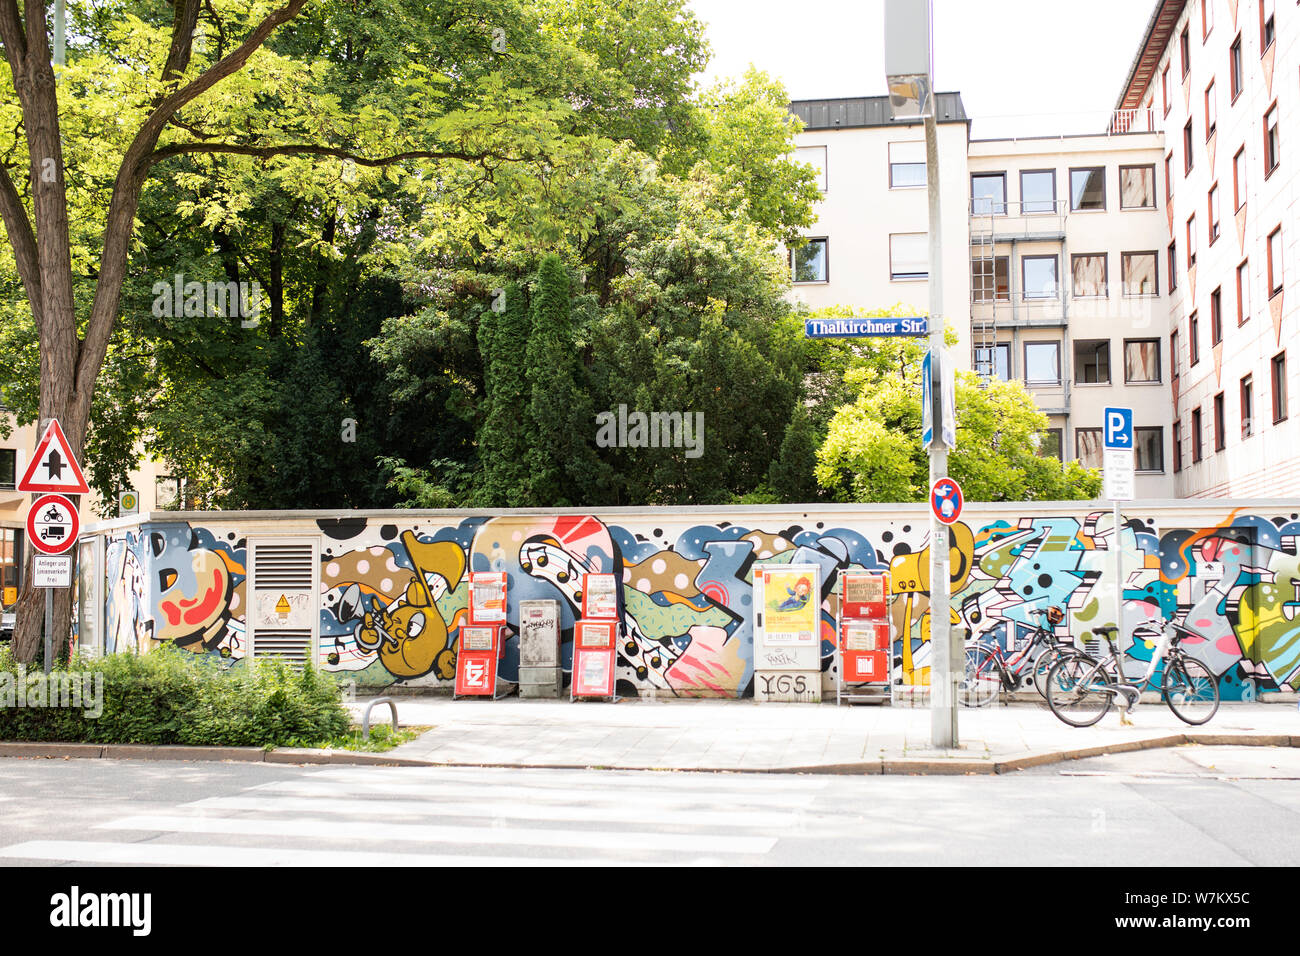 Street art mural on Thalkirchner Strasse in the Glockenbachviertel of Munich, Germany. Stock Photo